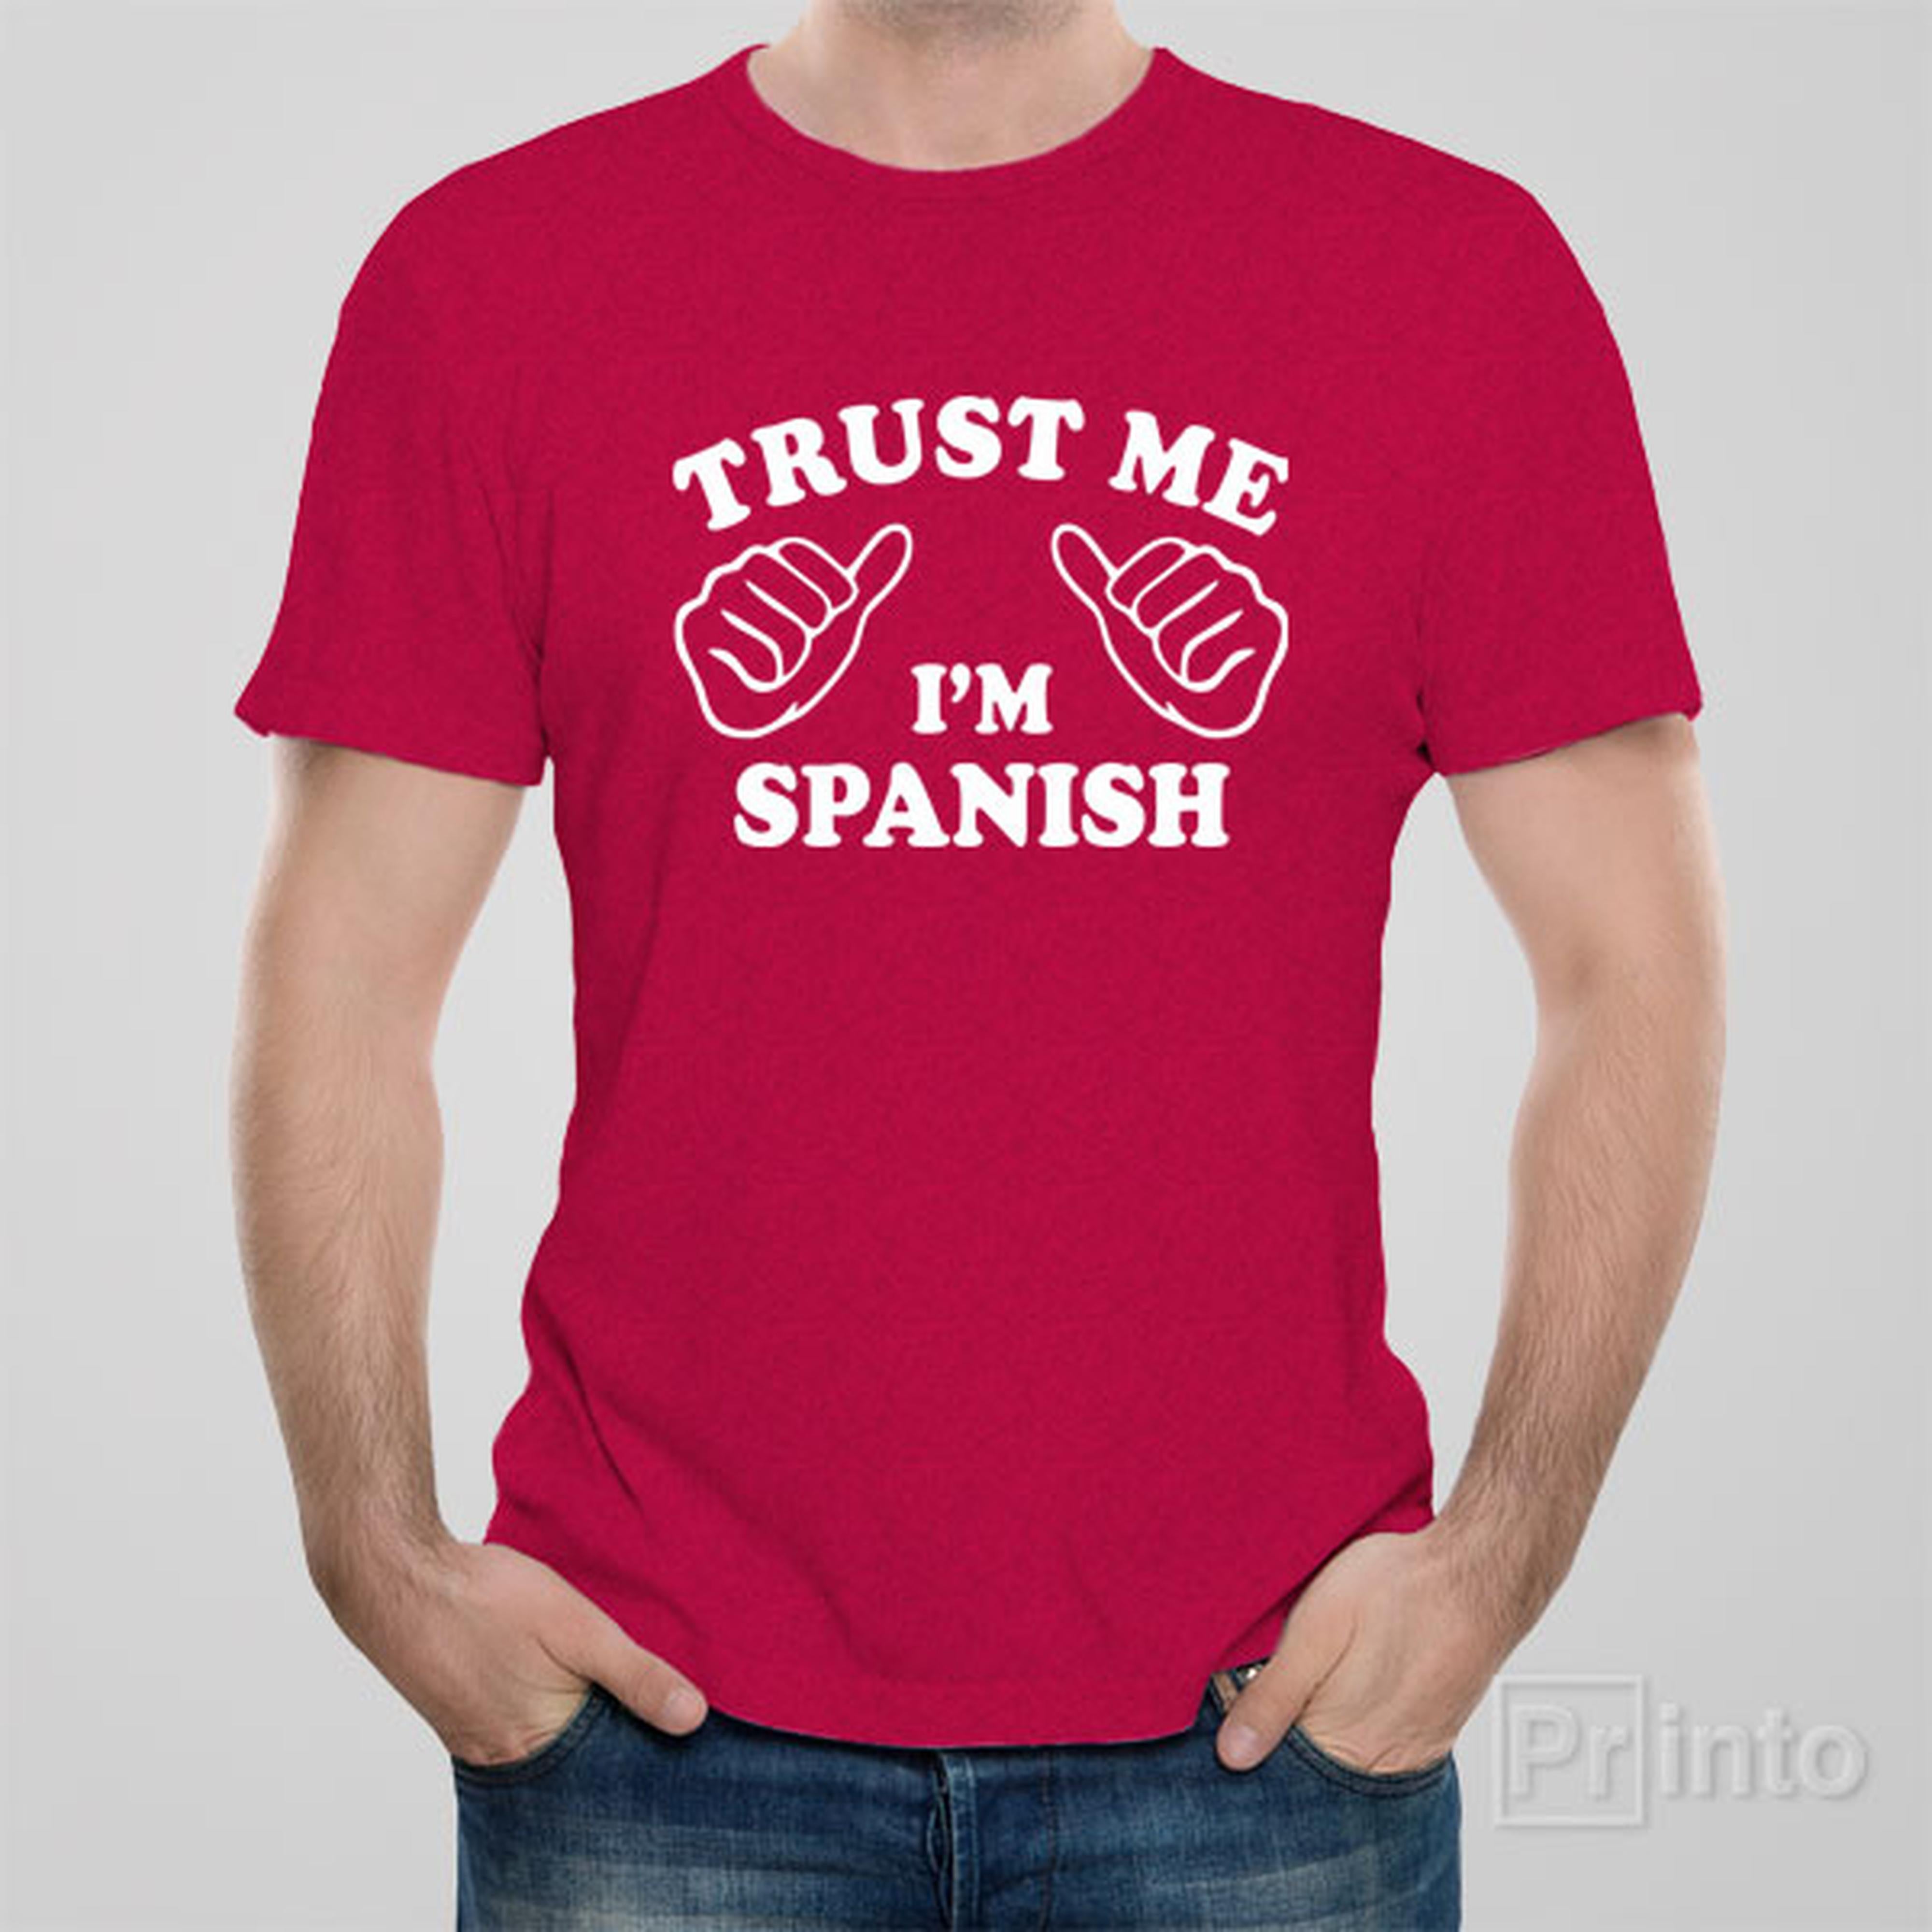 trust-me-i-am-spanish-t-shirt